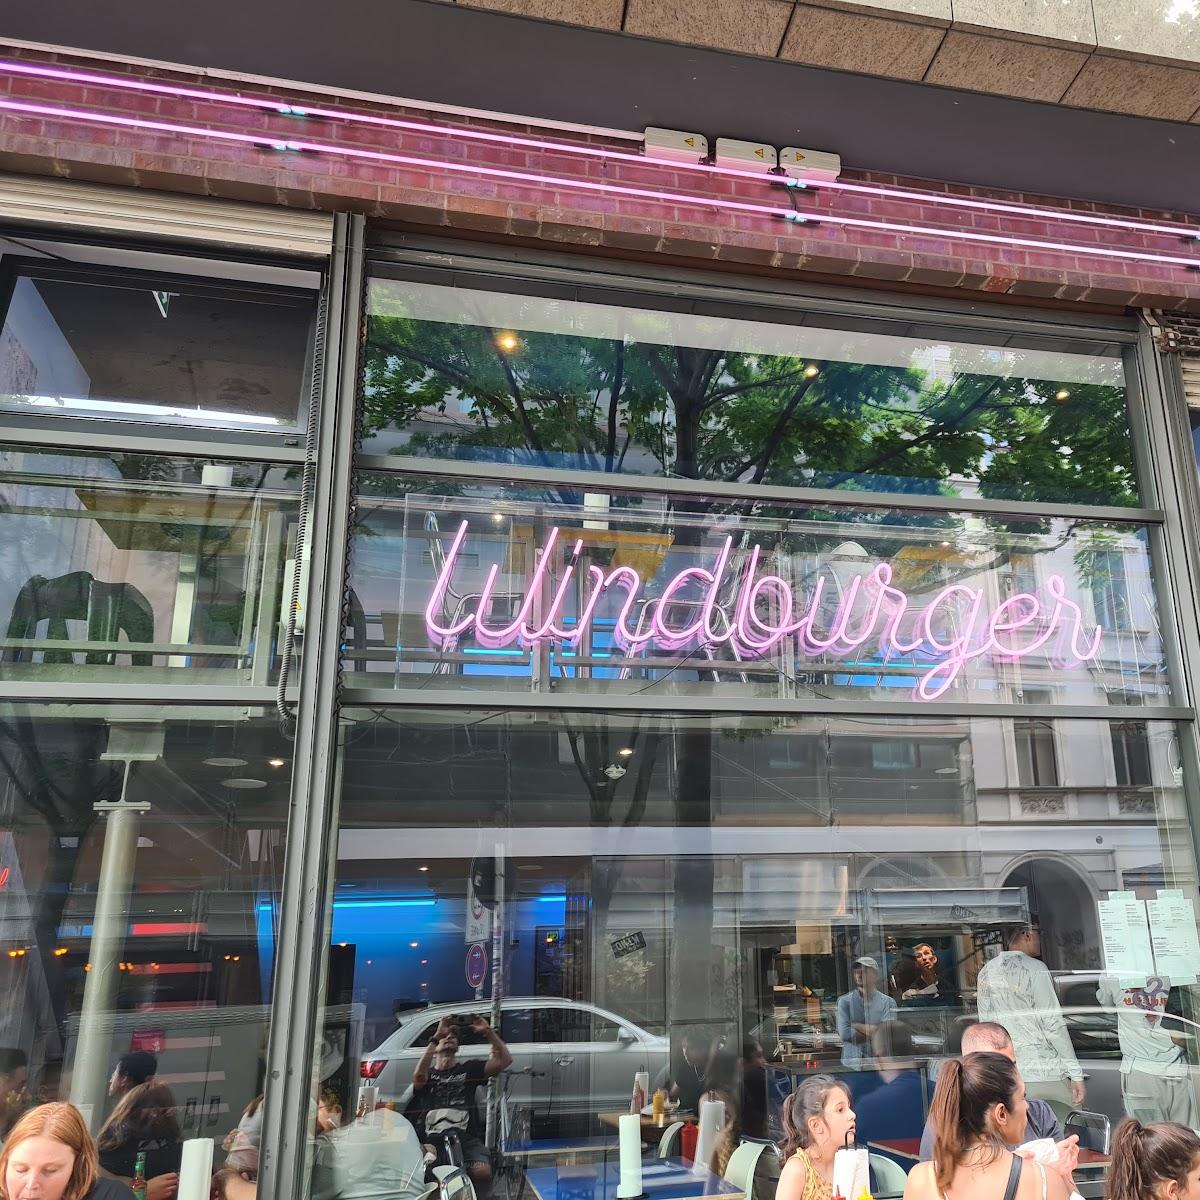 Restaurant "Windburger" in Berlin